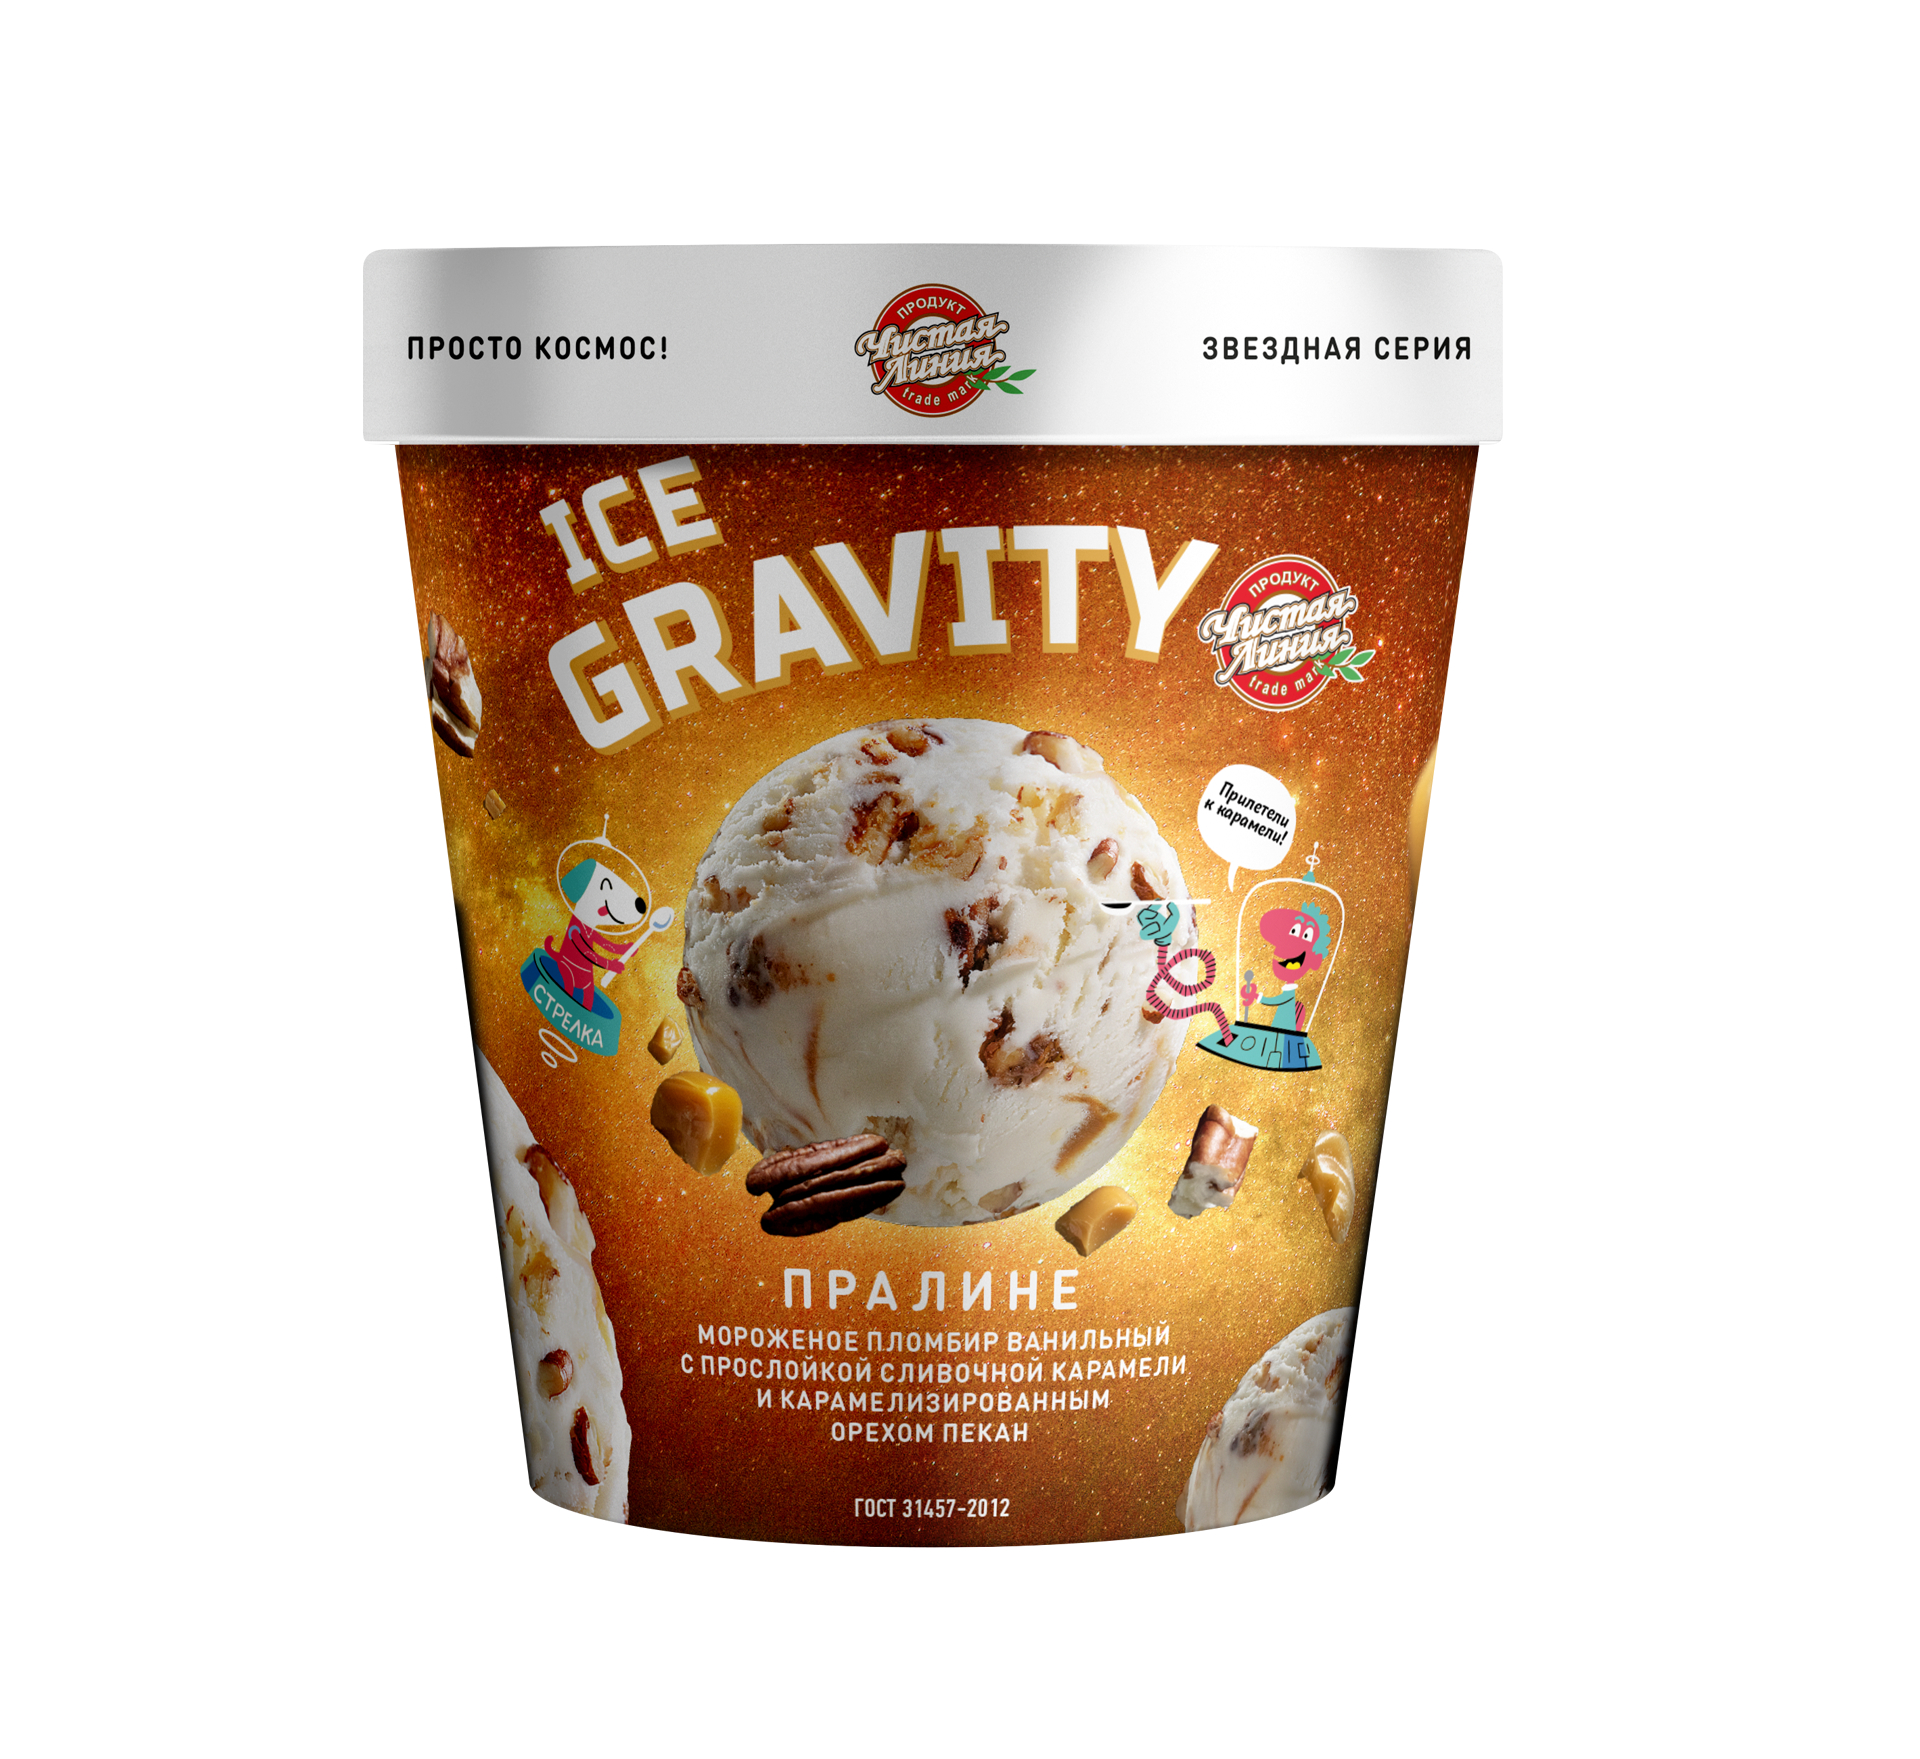 Мороженое Ice Gravity Пралине пломбир ванильный, карамель и орех пекан, ГОСТ, 12%, 270 г